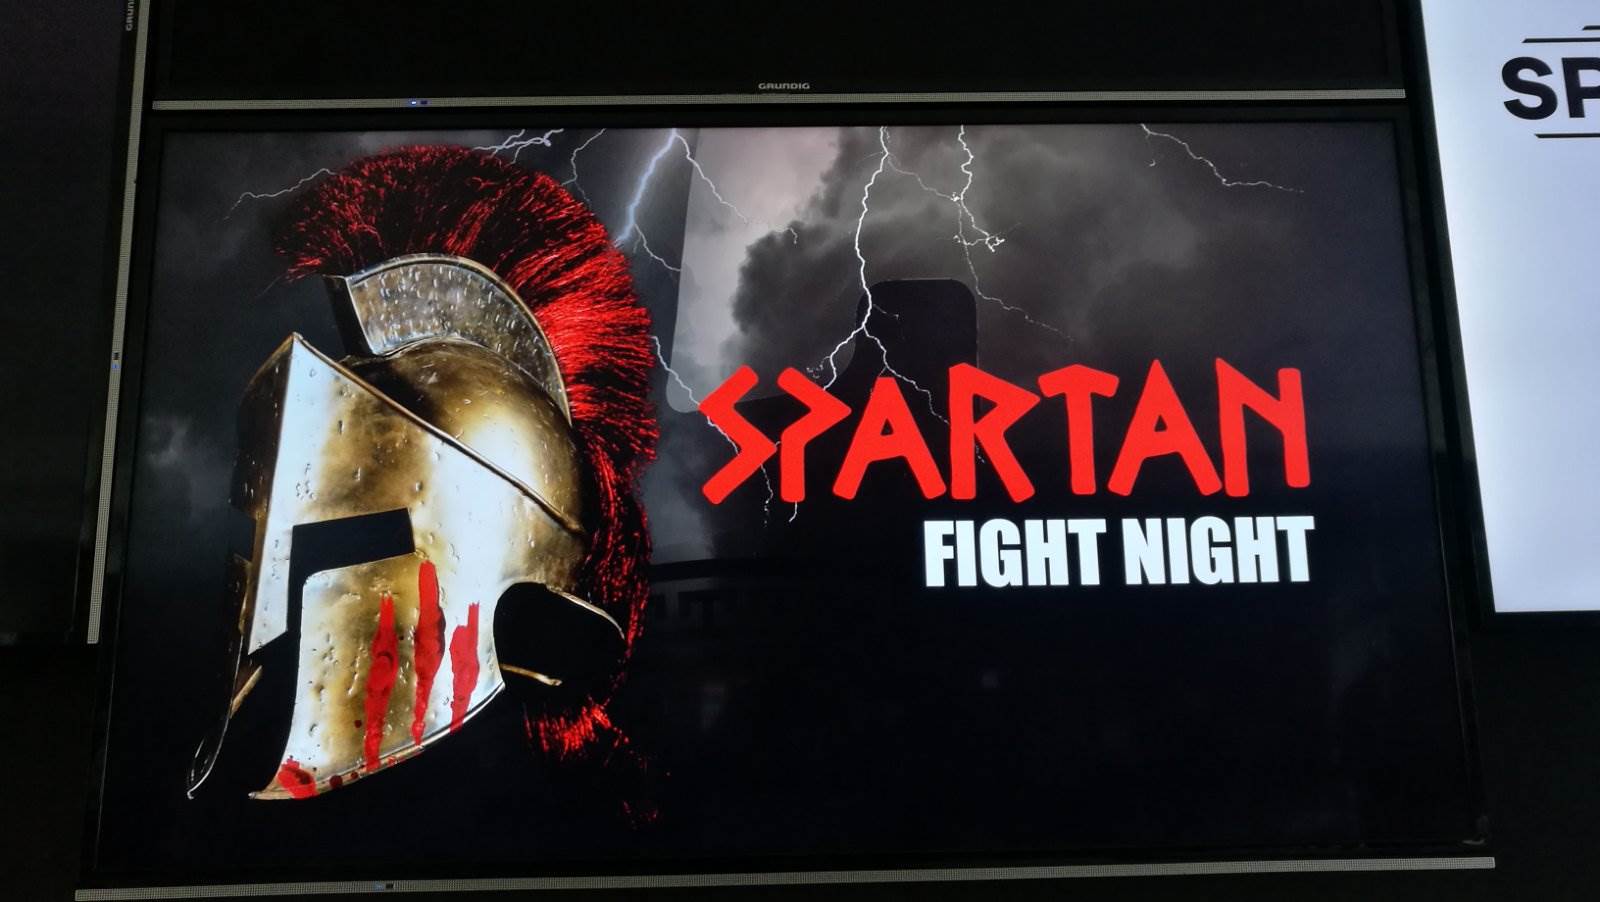  Spartan fight night 2019 